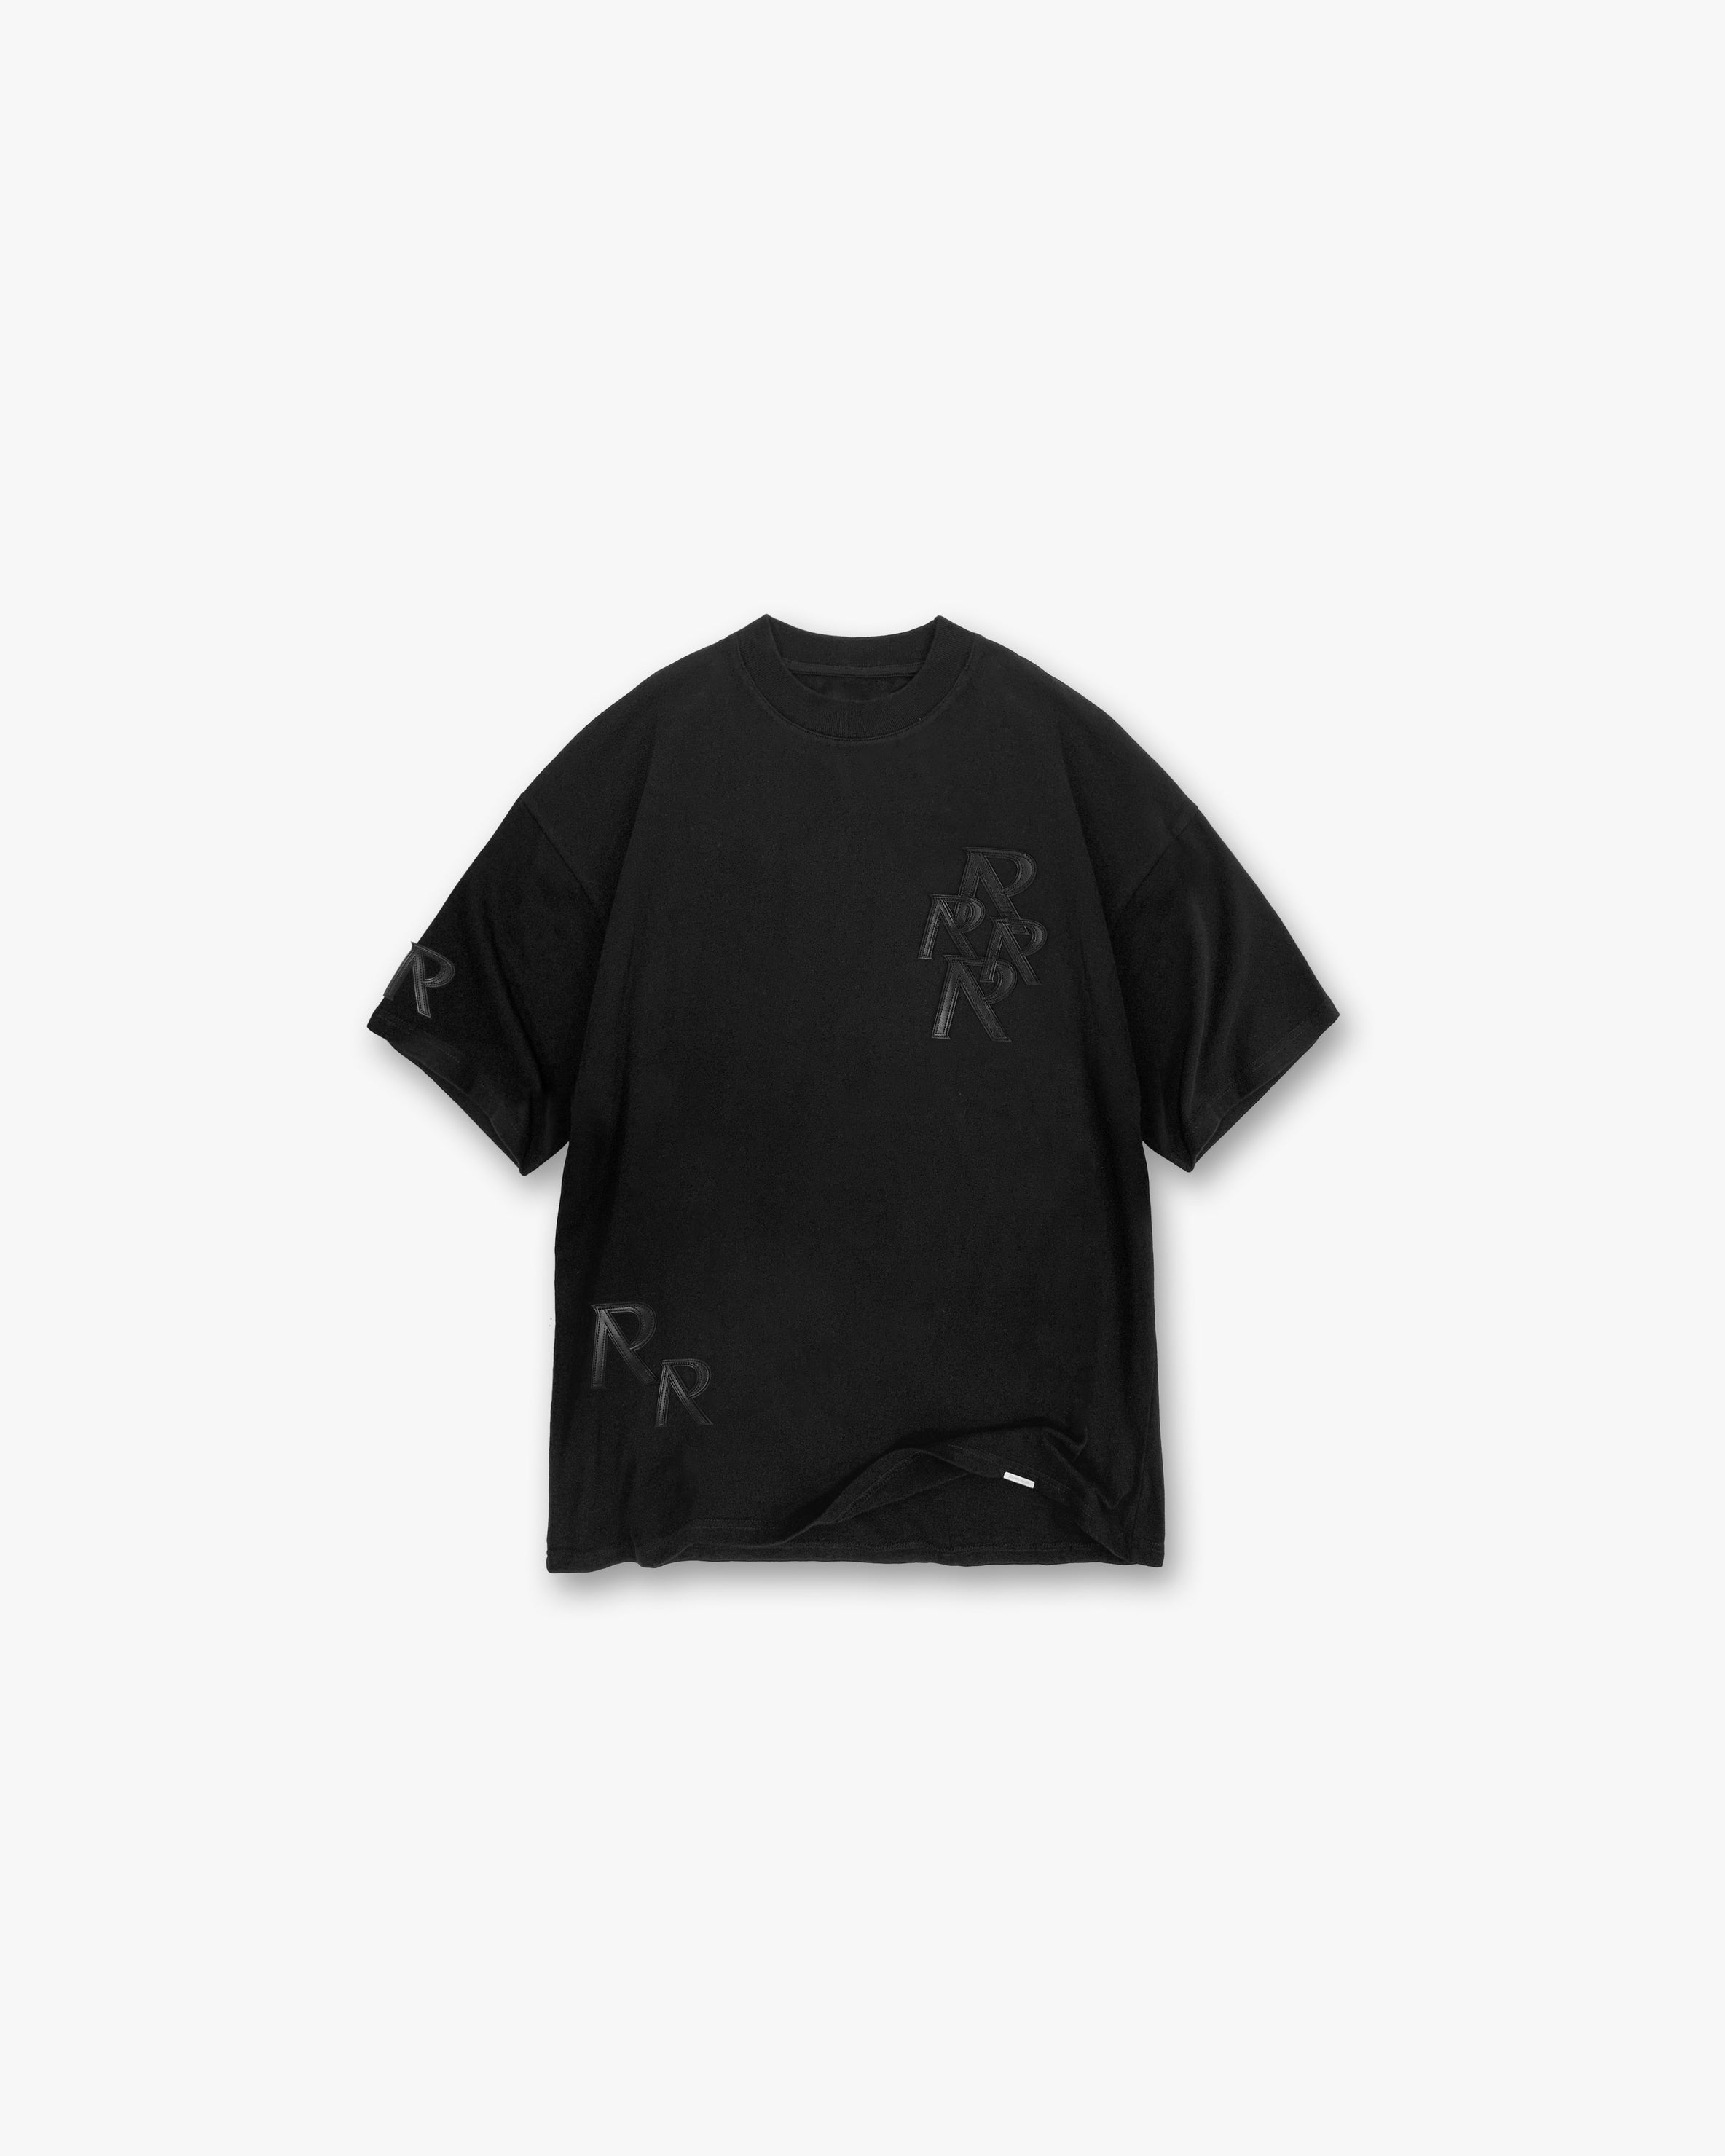 Applique Initial T-Shirt - Off Black